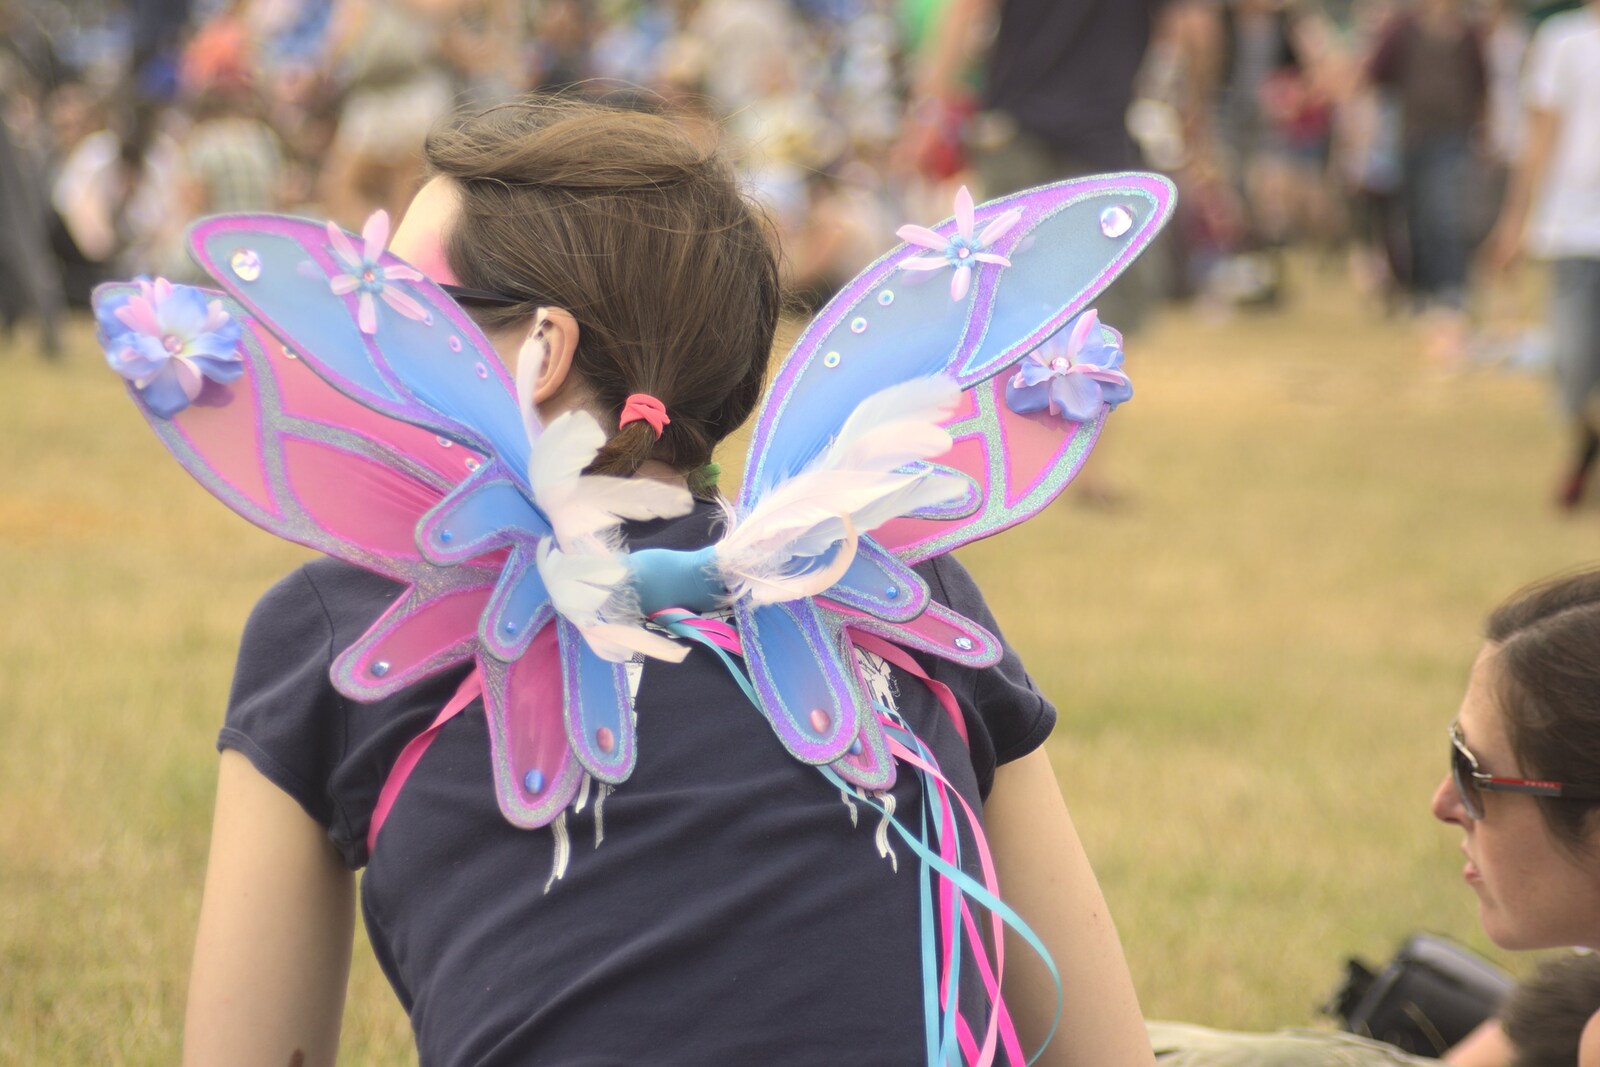 Fairy wings from The Fifth Latitude Festival, Henham Park, Suffolk - 16th July 2010